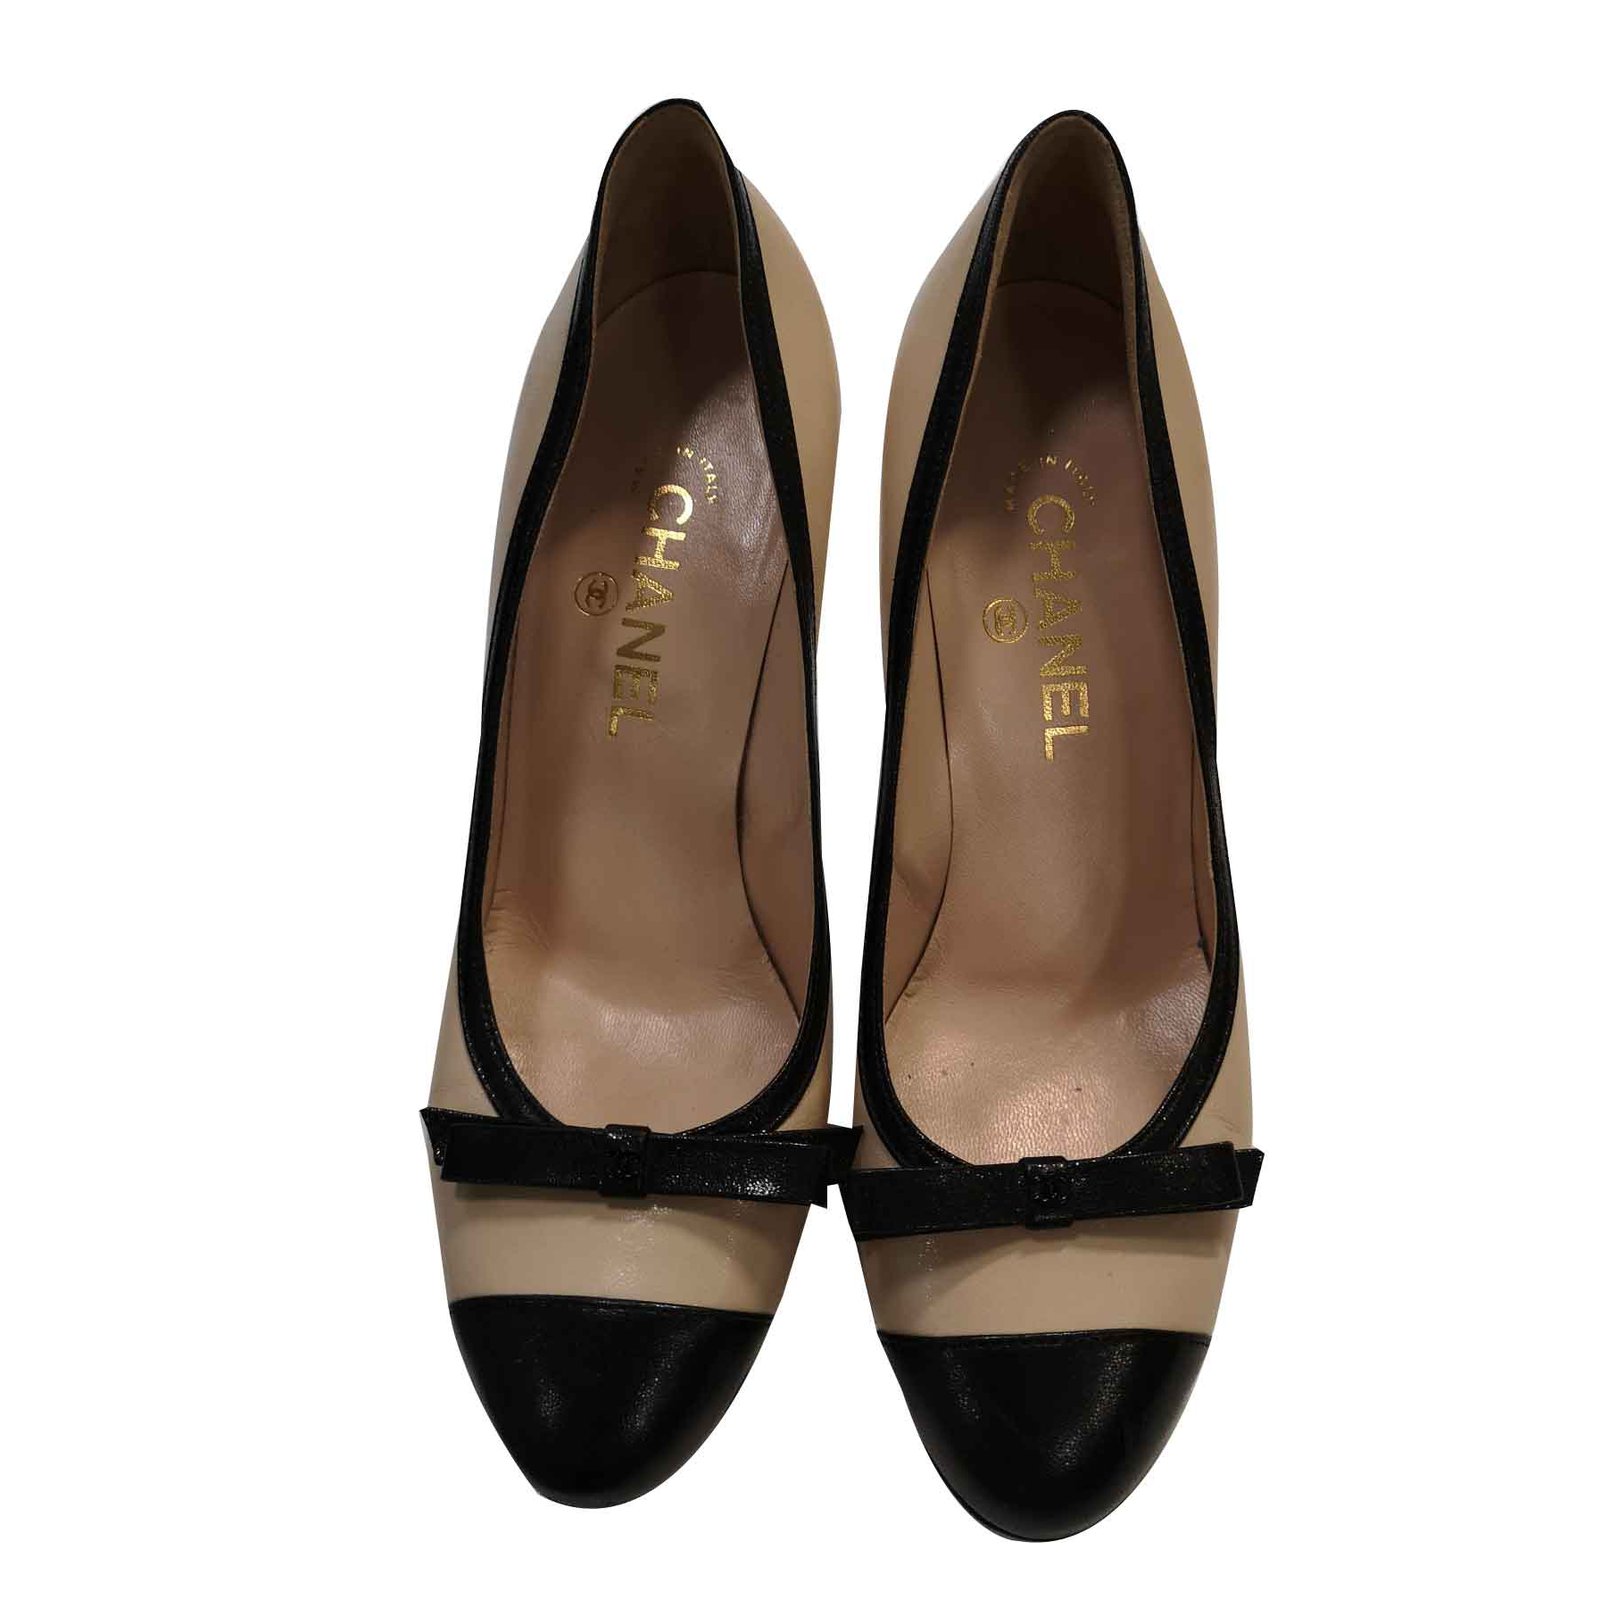 CHANEL, Shoes, Chanel Runway Two Tone Black Beige Mary Jane Heels